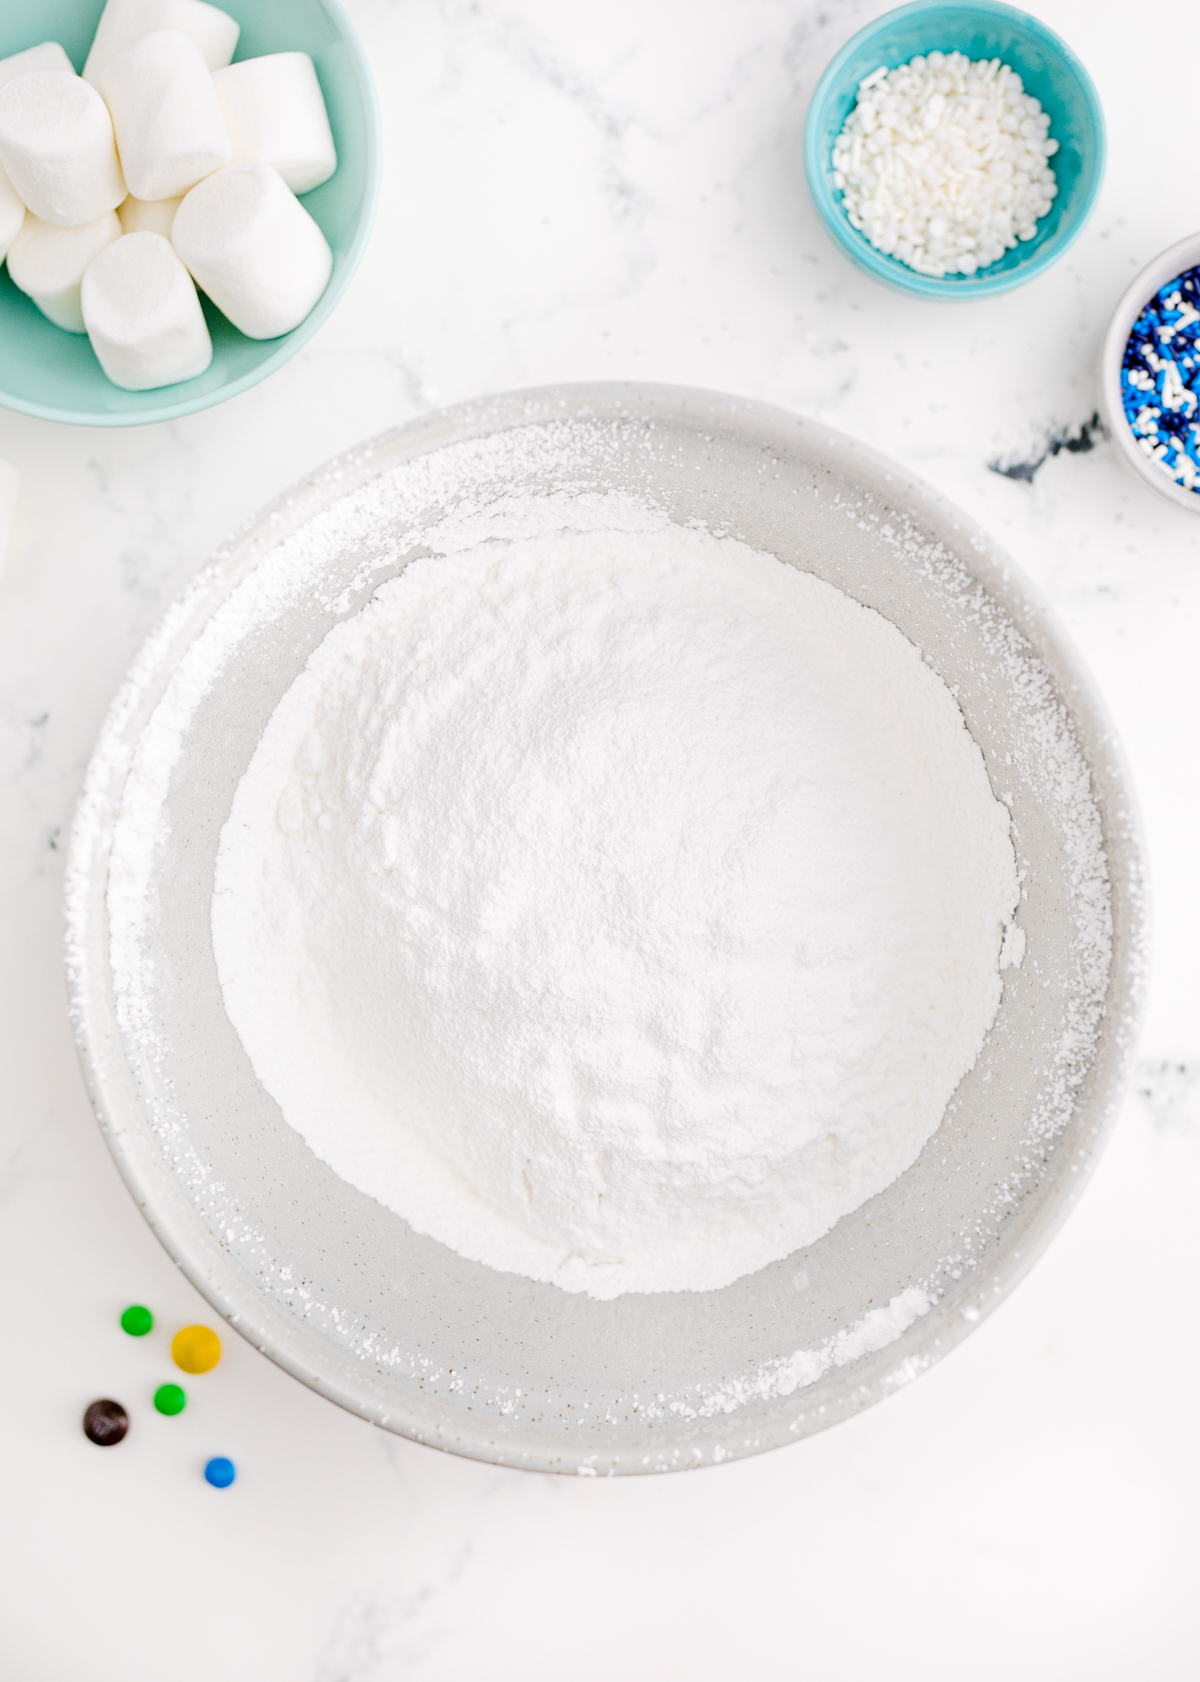 meringue powder in a glass bowl